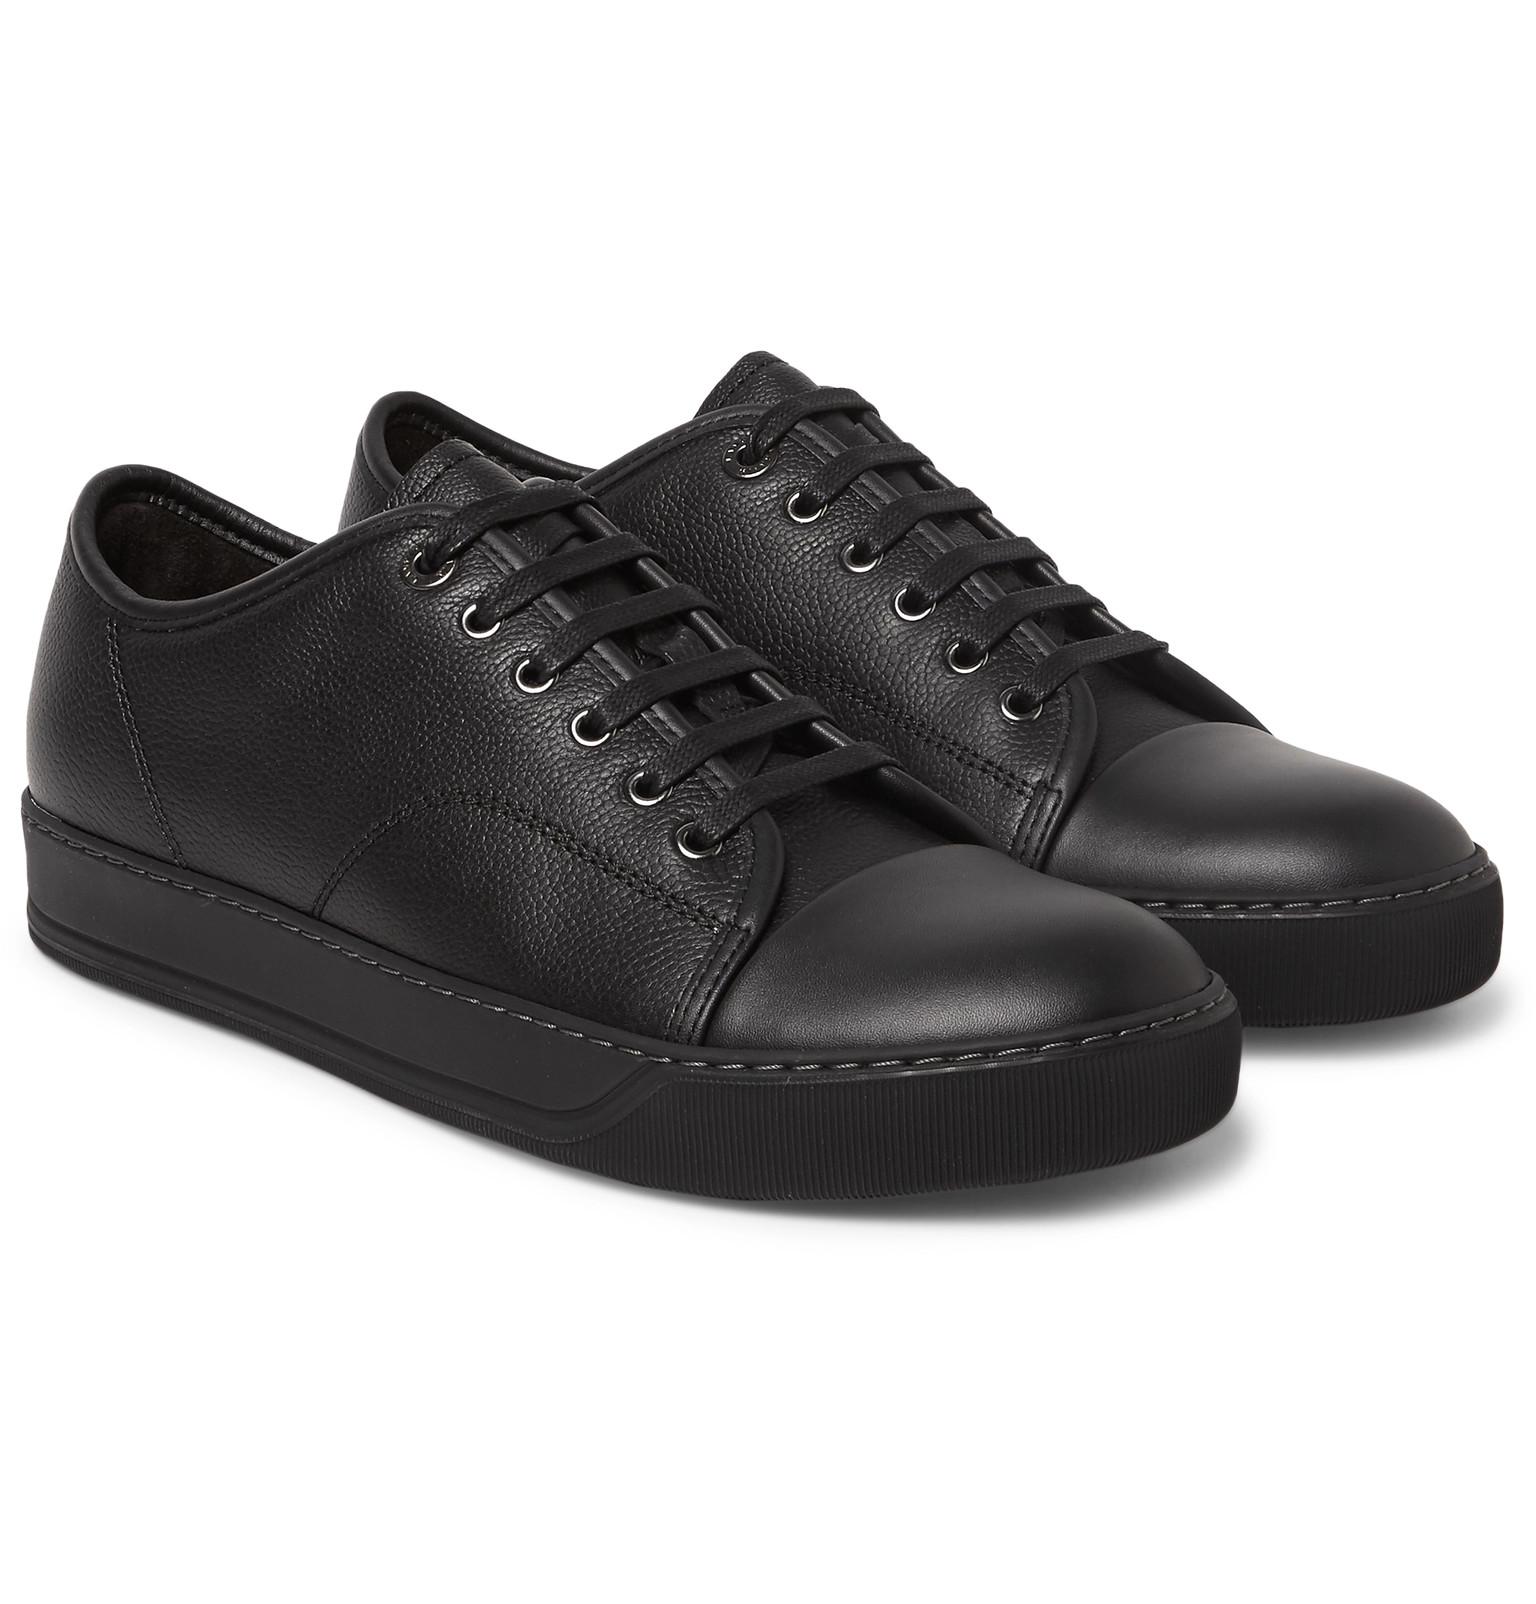 Lyst - Lanvin Cap-toe Full-grain Leather Sneakers in Black for Men